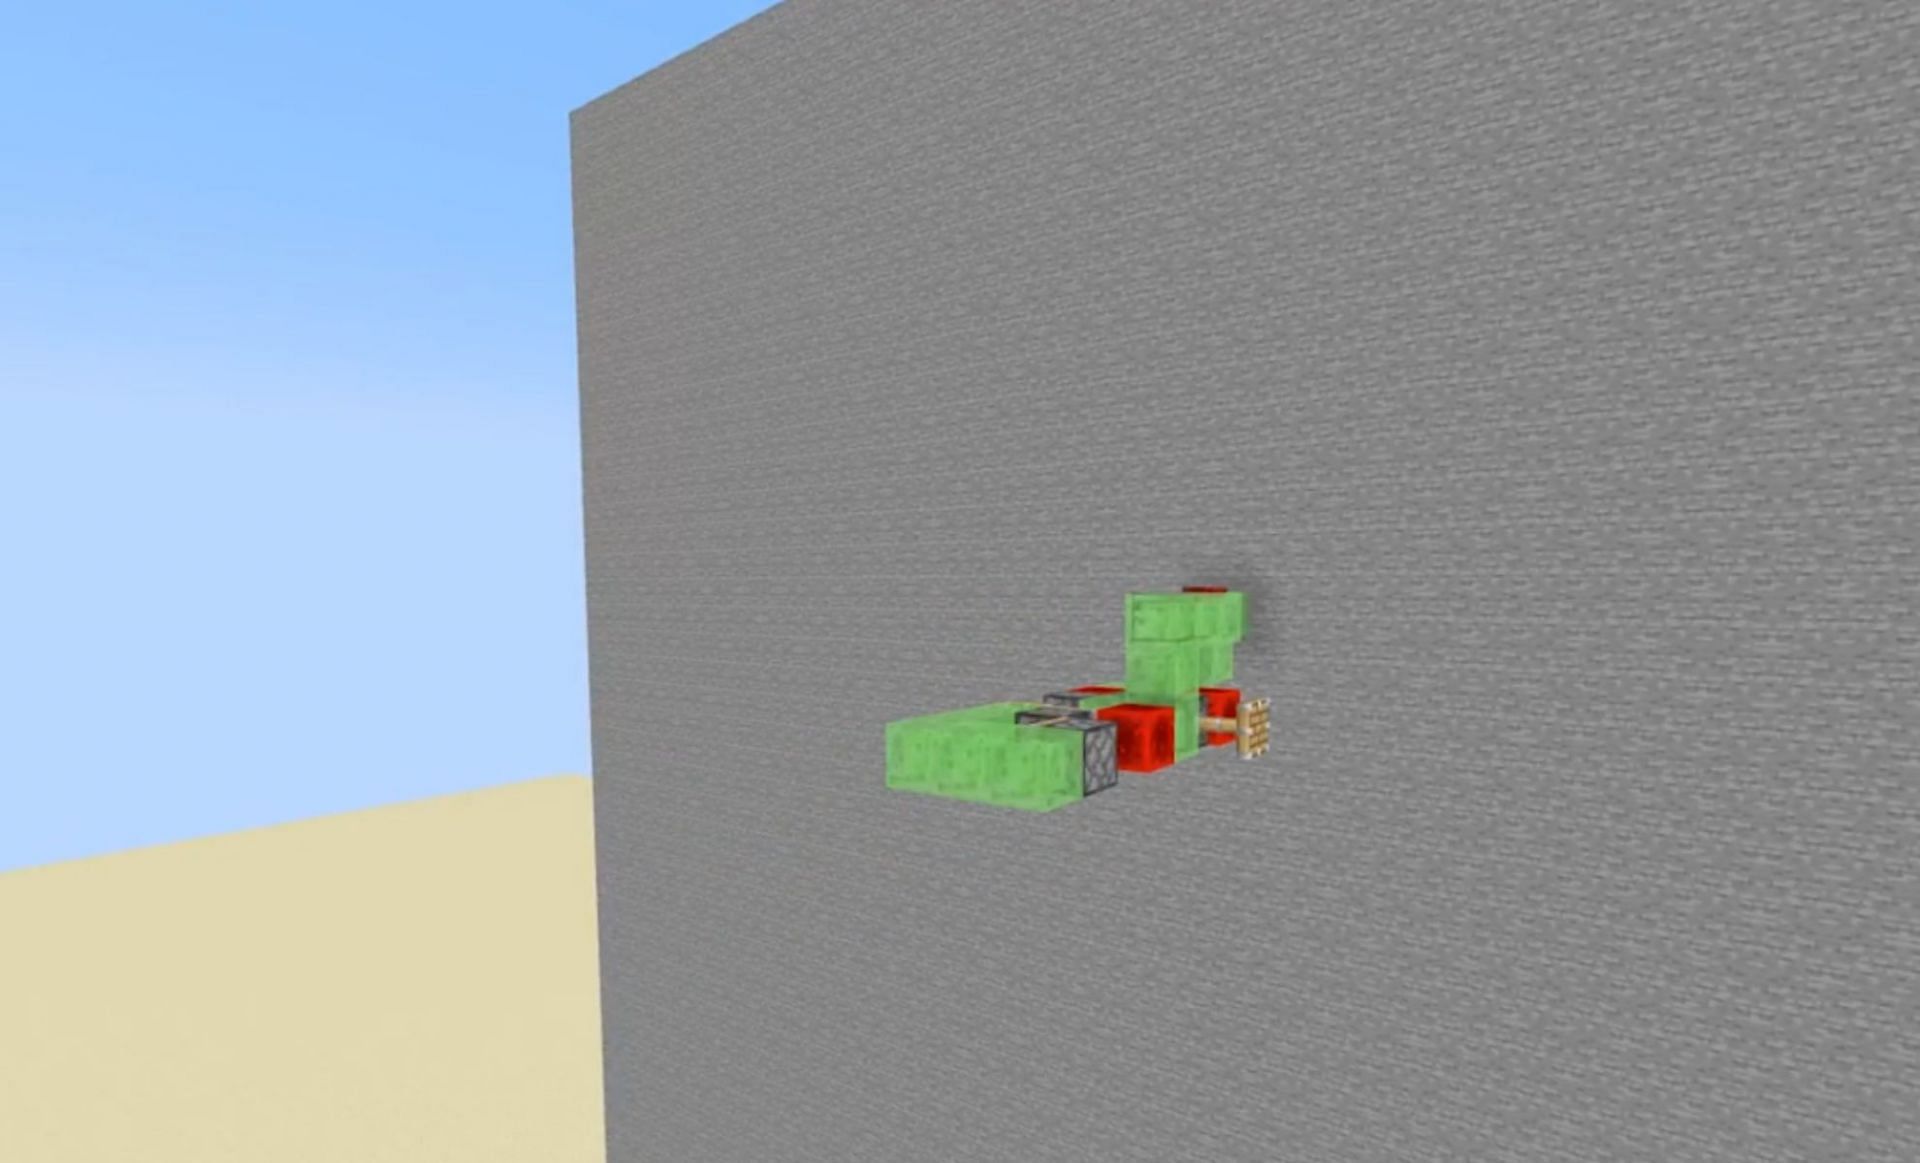 A TNT device in Minecraft (Image via u/GenericRedstonGenius/Reddit)